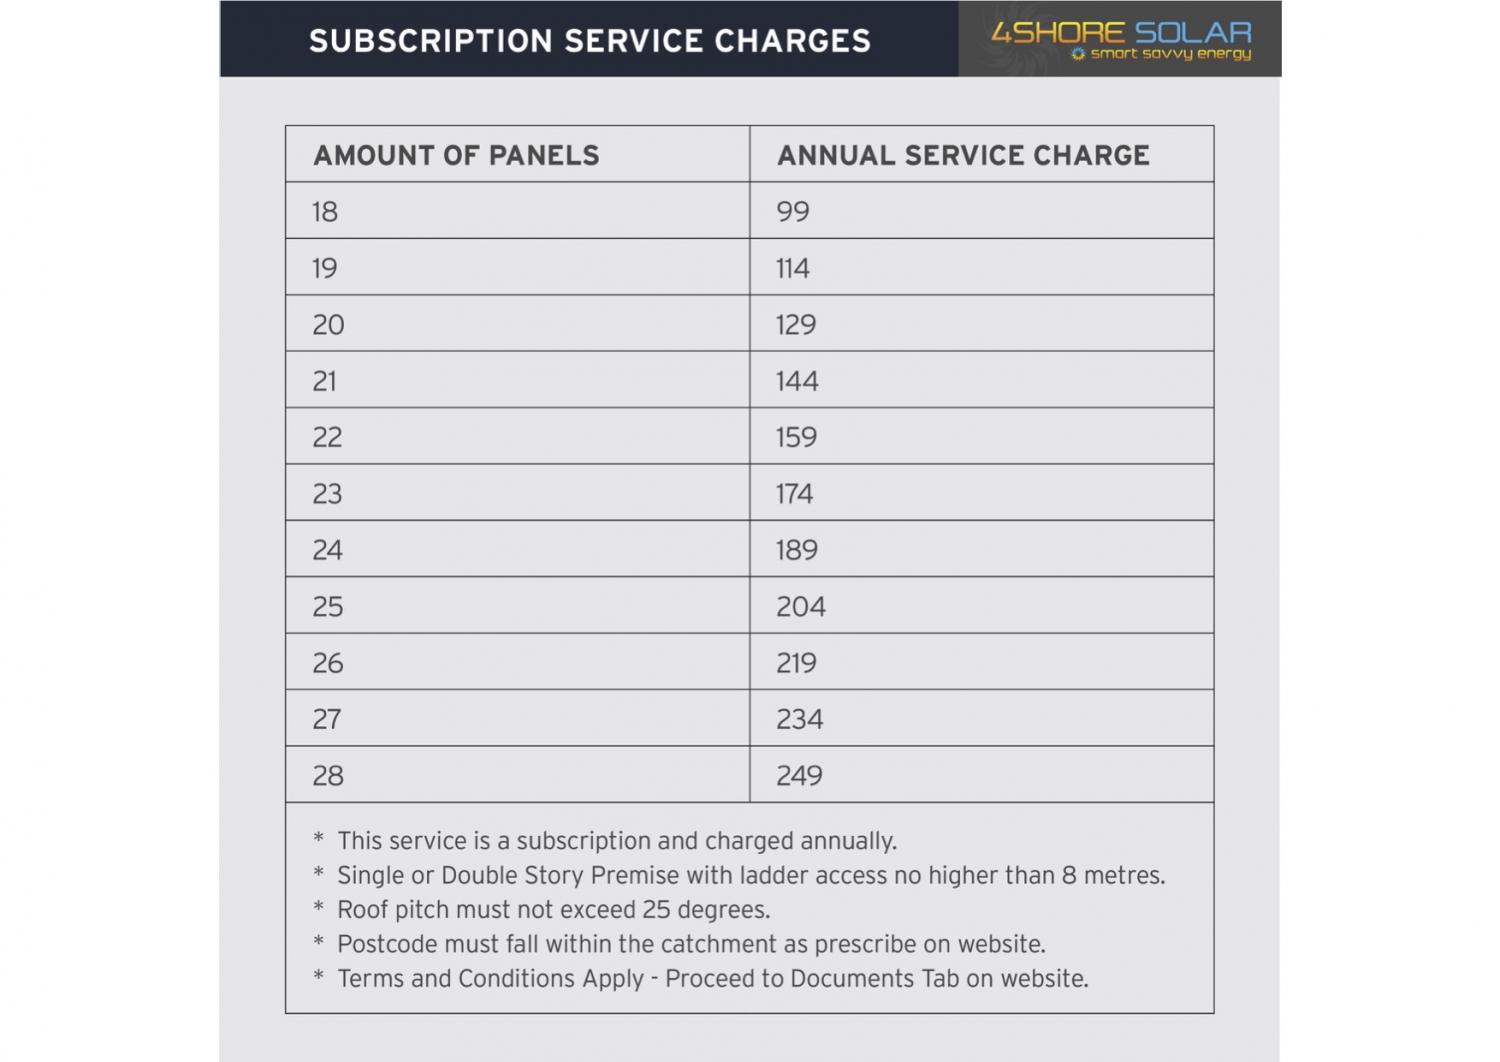 4shore solar subscription service charges for maintenance program